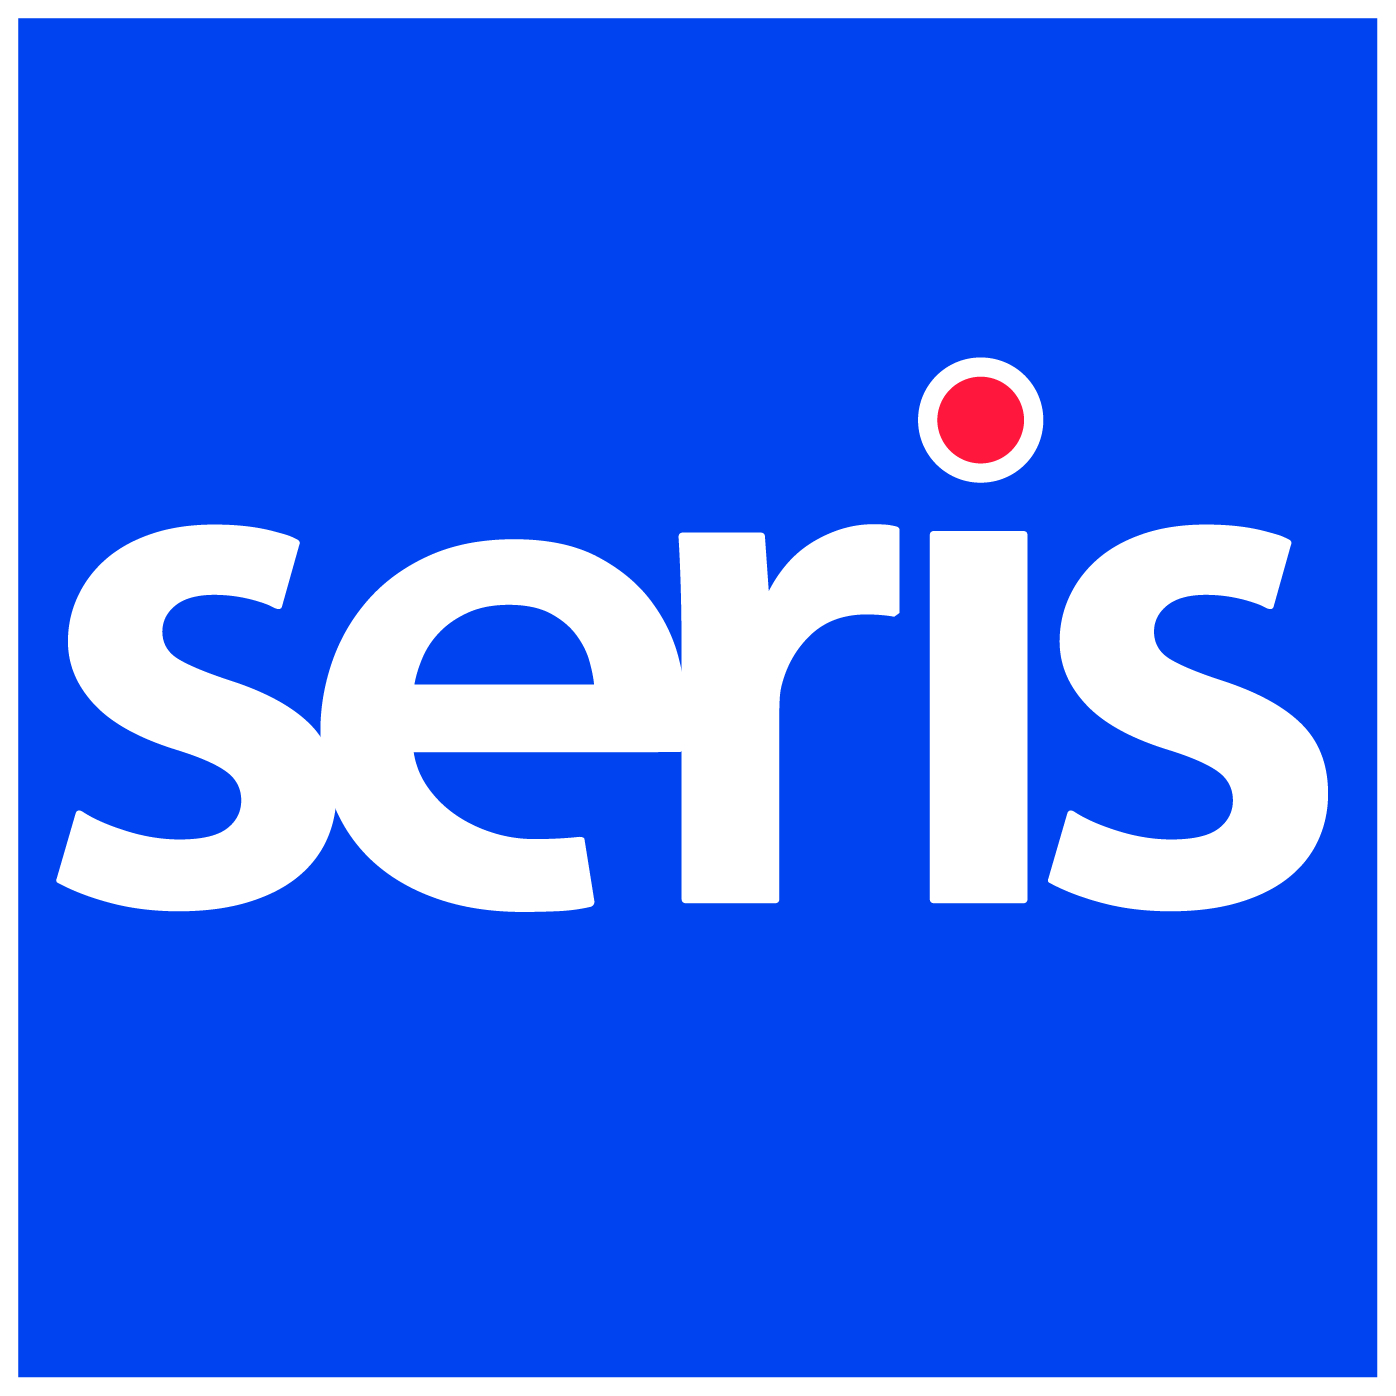 SERIS-logo_web-rvb.jpg